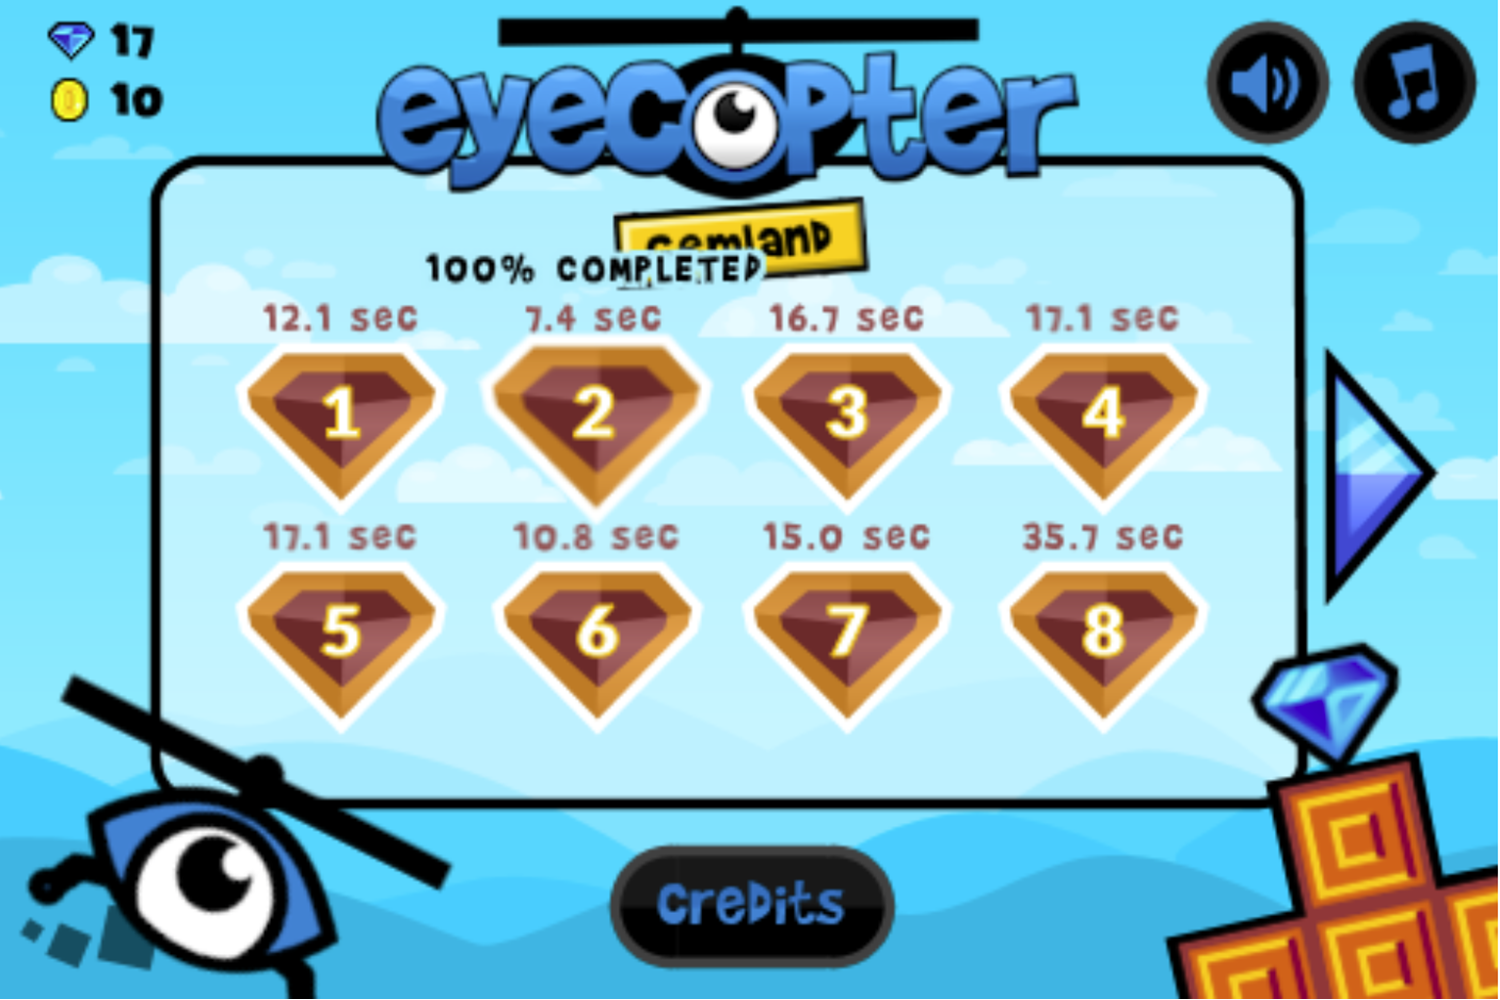 Eyecopter Gemland Game Level Select Complete Screenshot.